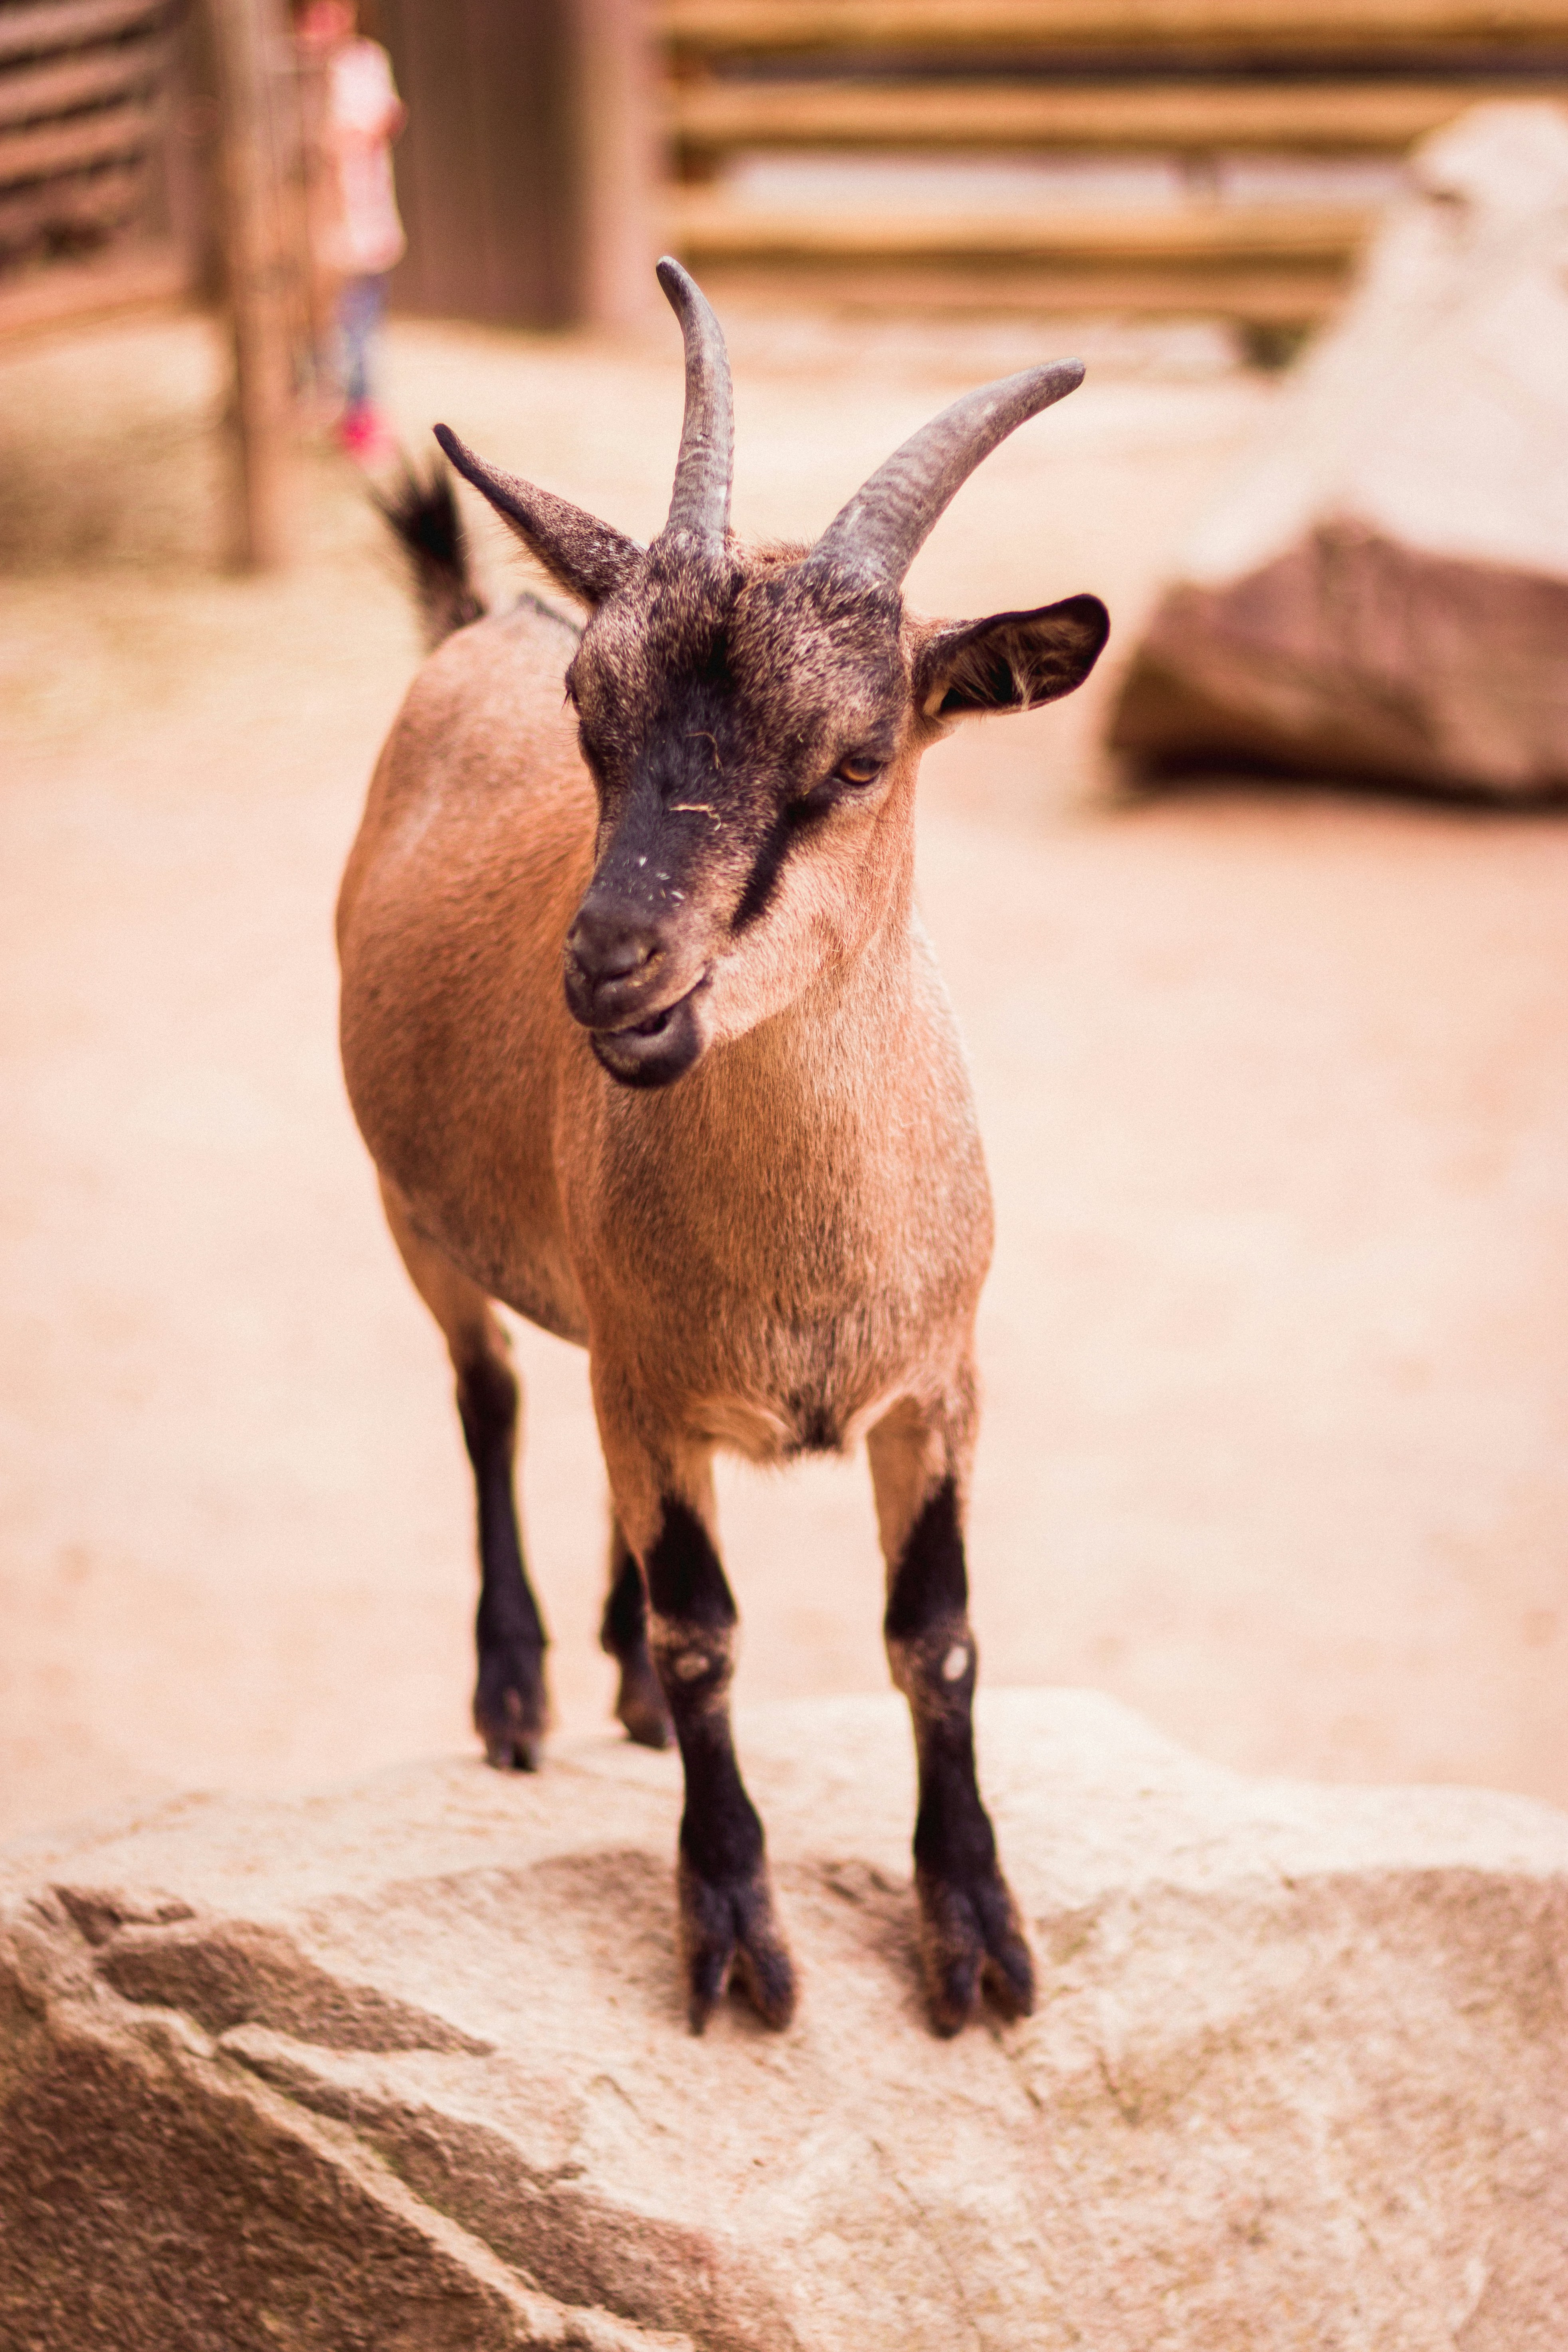 Goat in the Dortmunder Zoo